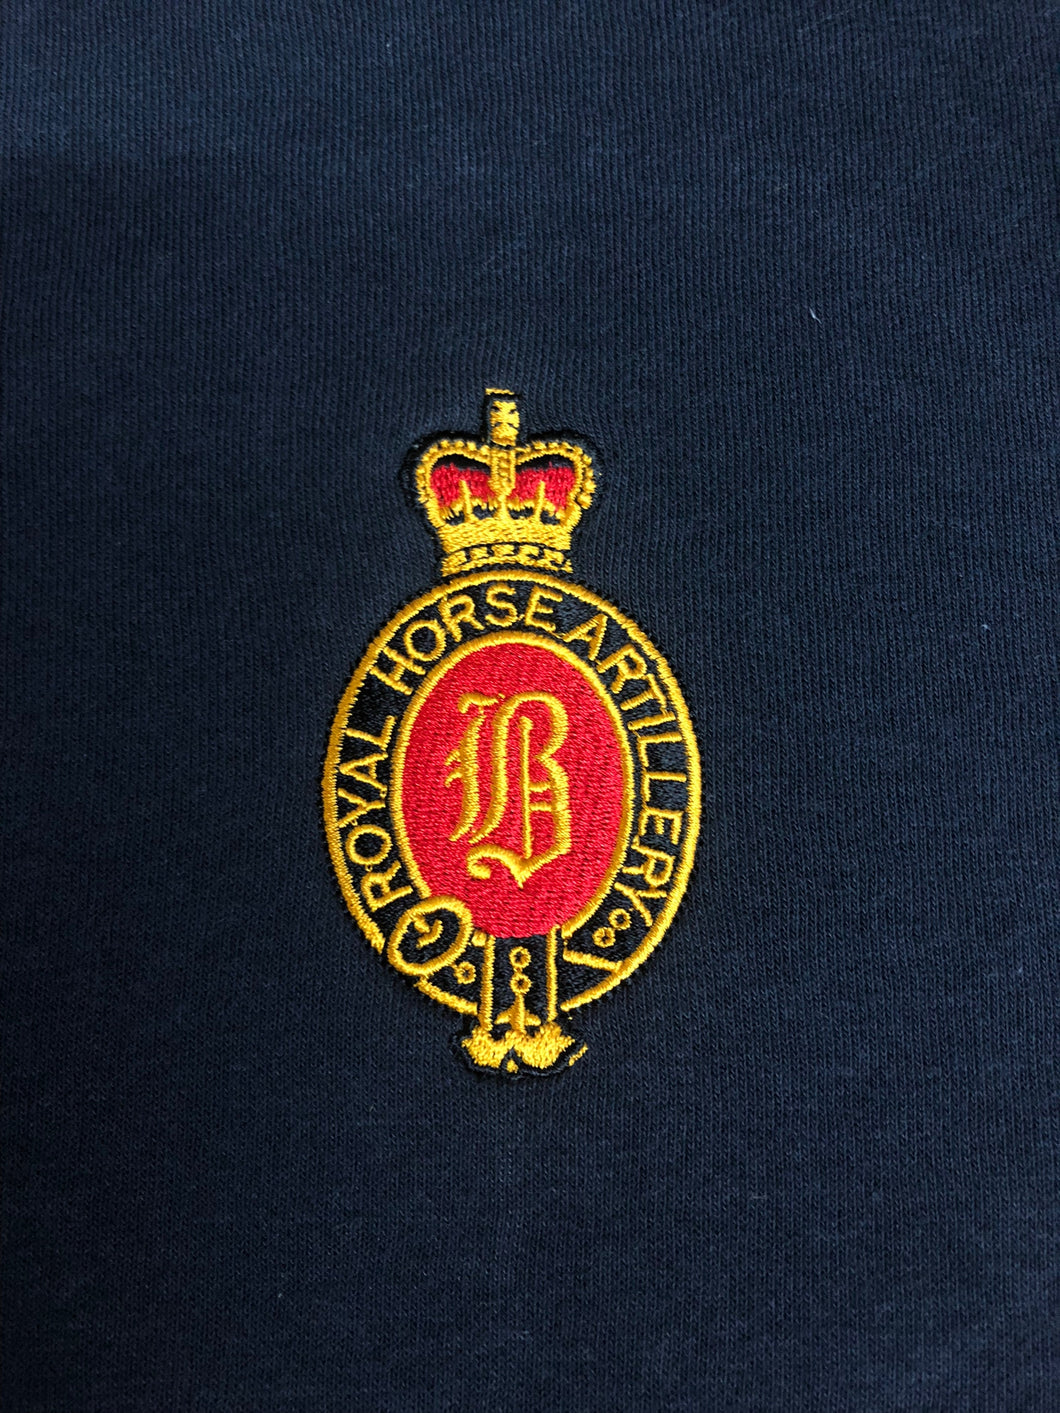 B Battery Royal Horse Artillery (RHA) - Embroidered - Choose your Garment